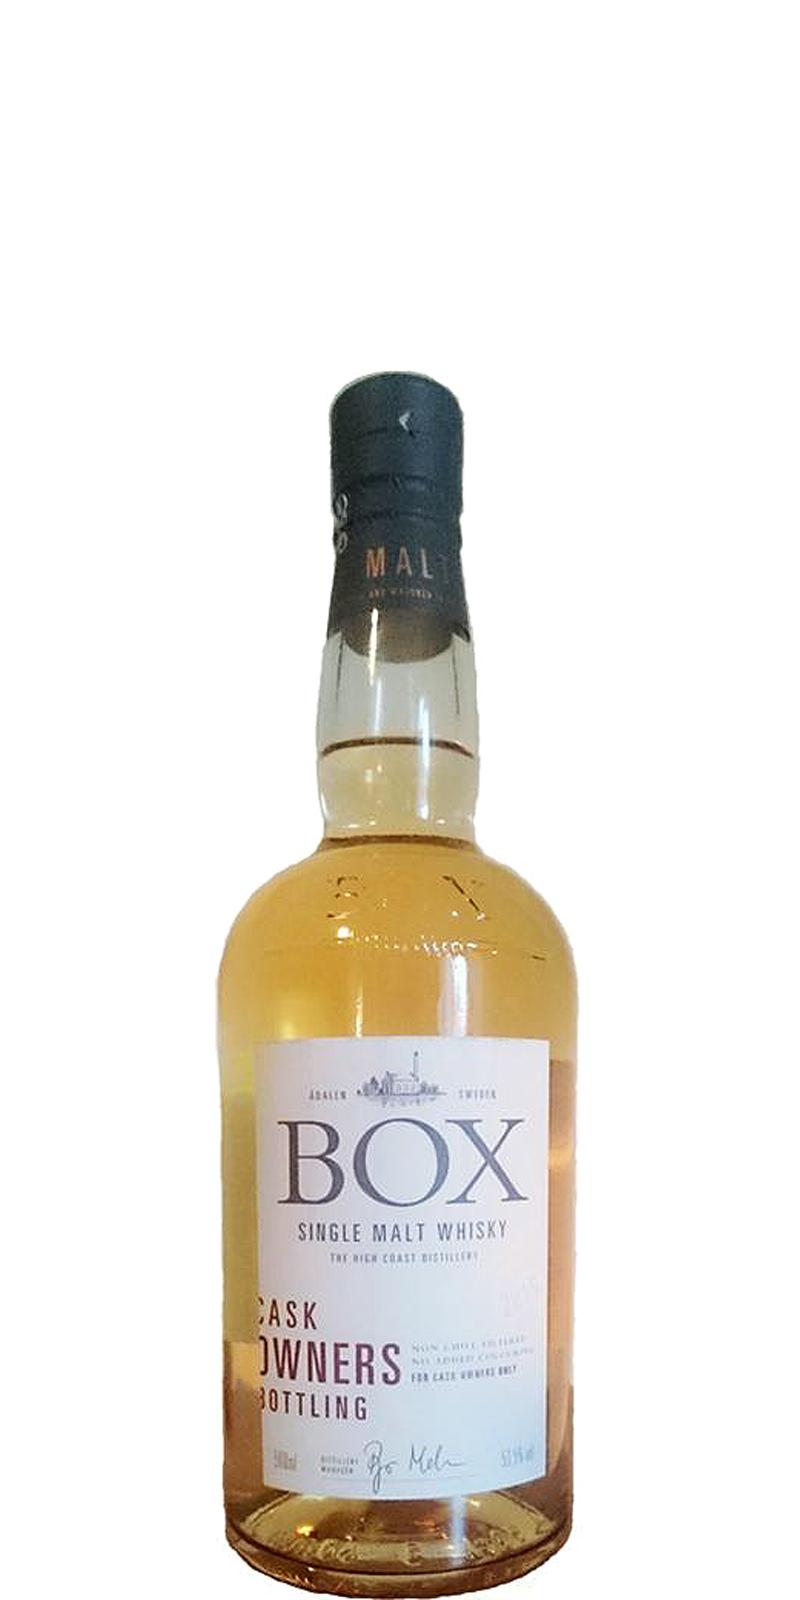 Box Cask Owners Bottling 2015 53.5% 500ml